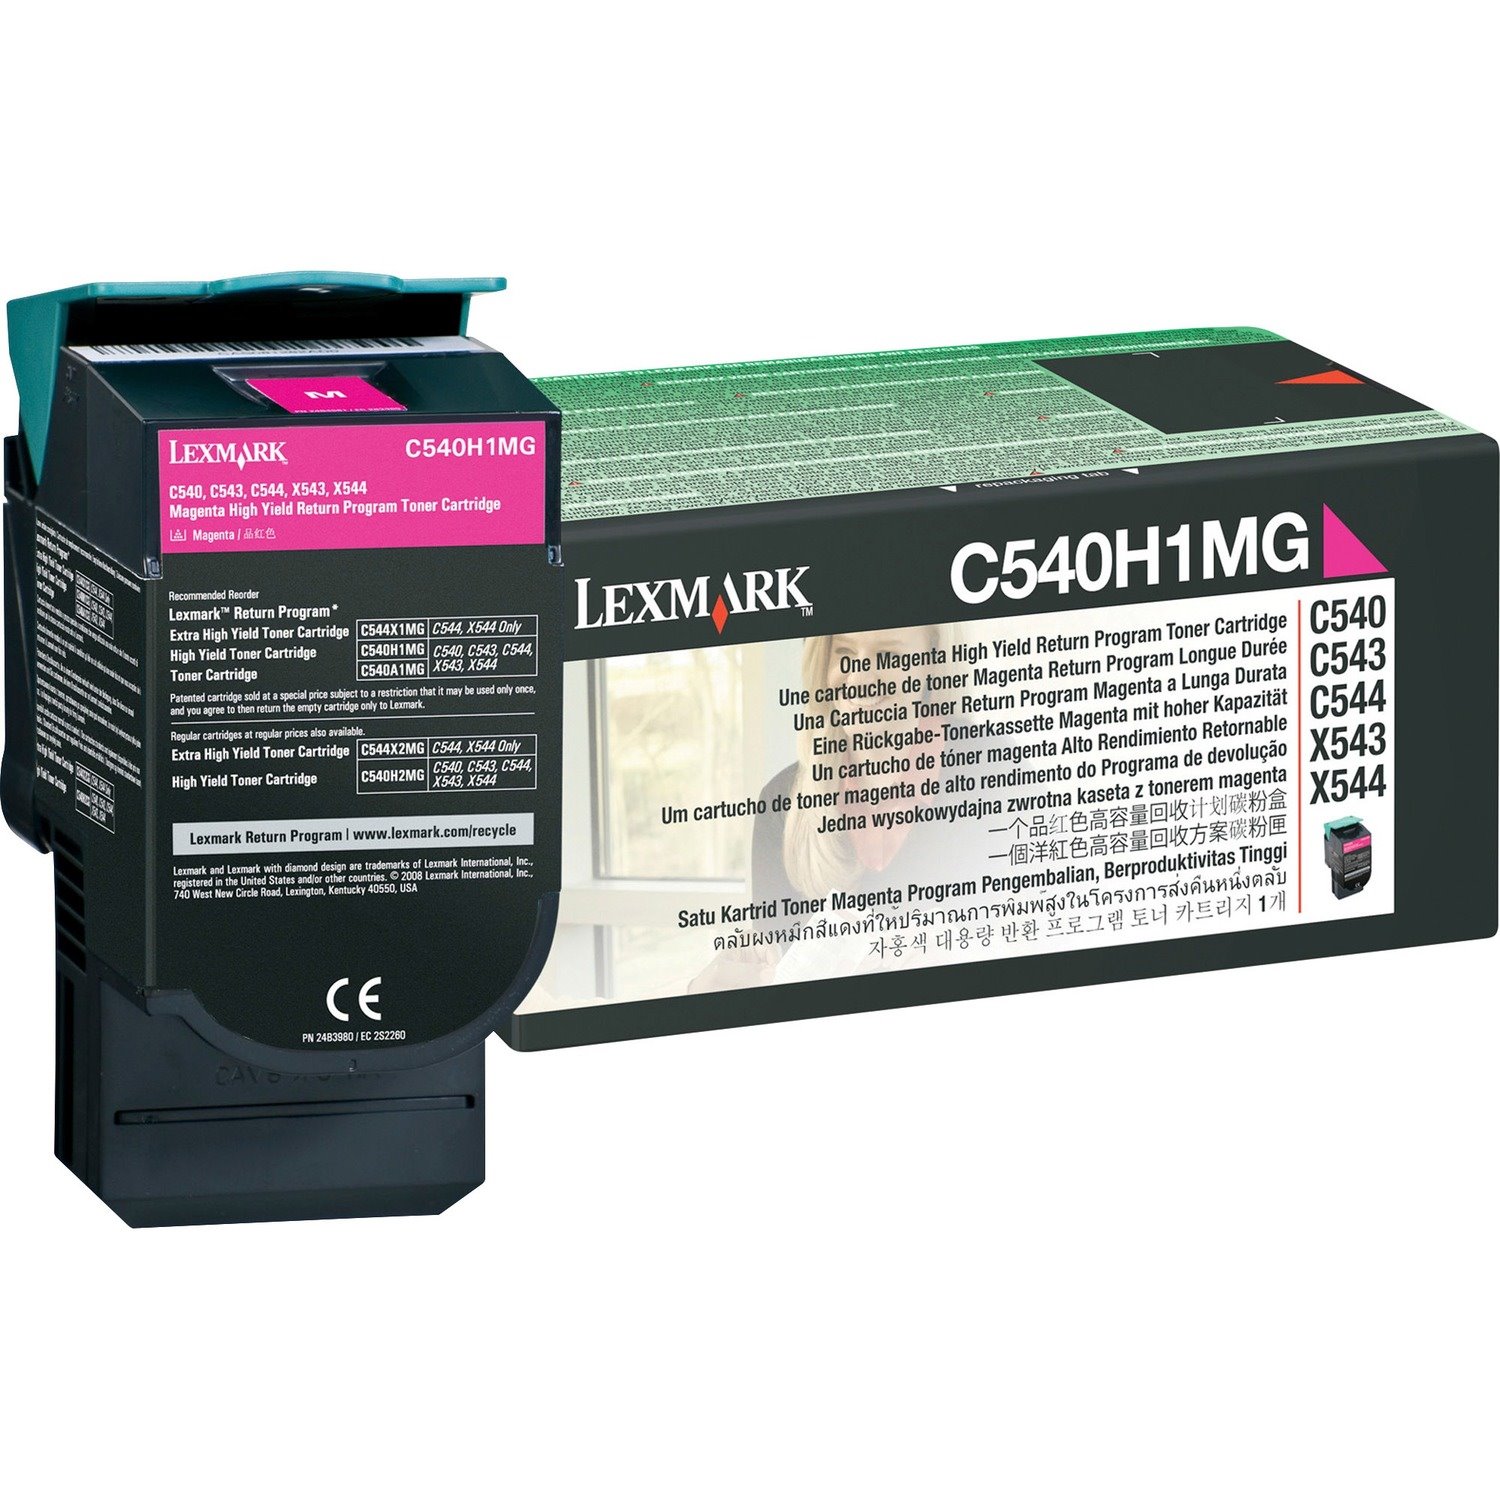 Lexmark C540H1MG Original Laser Toner Cartridge - Magenta Pack